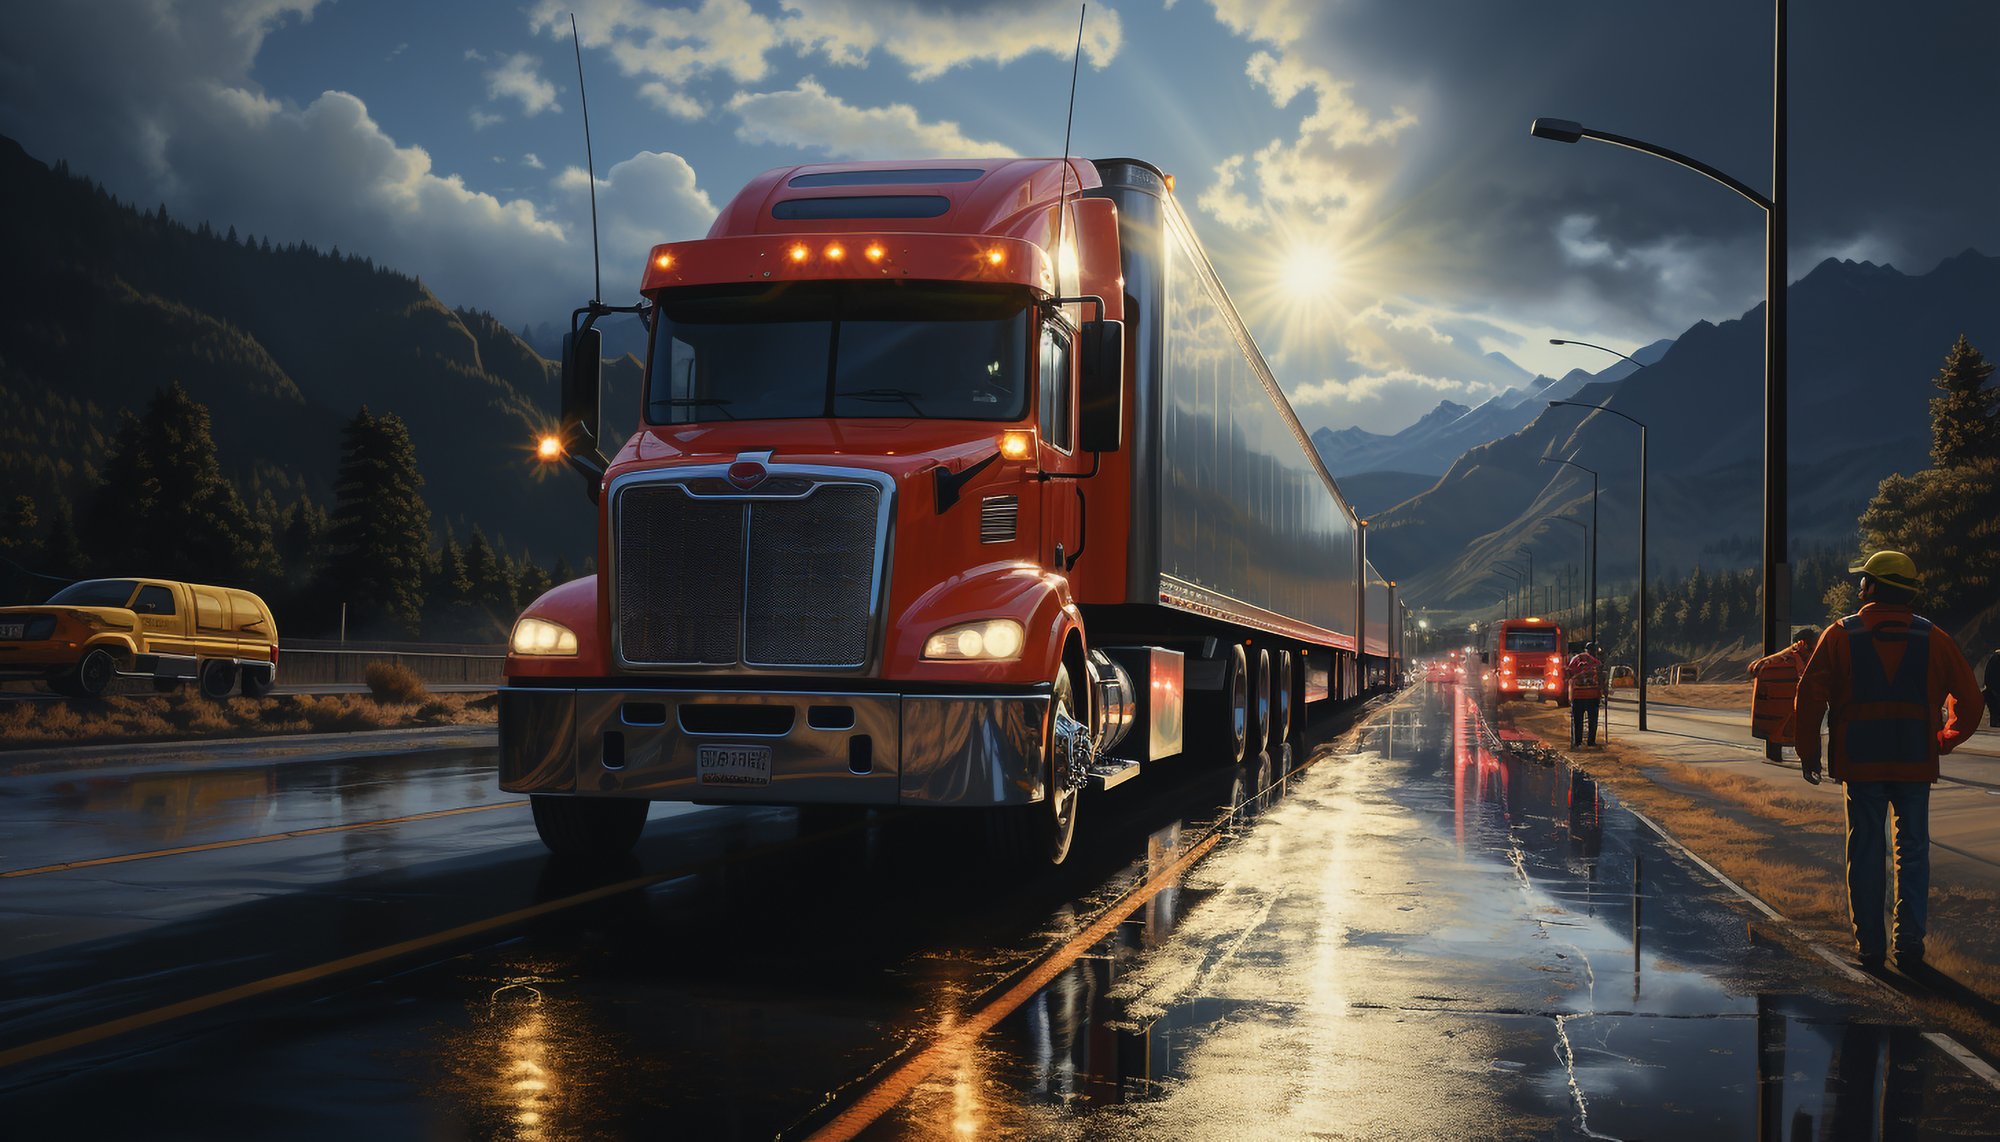 vecteezy_transportation-industry-delivering-freight-trucks-speeding_26450544